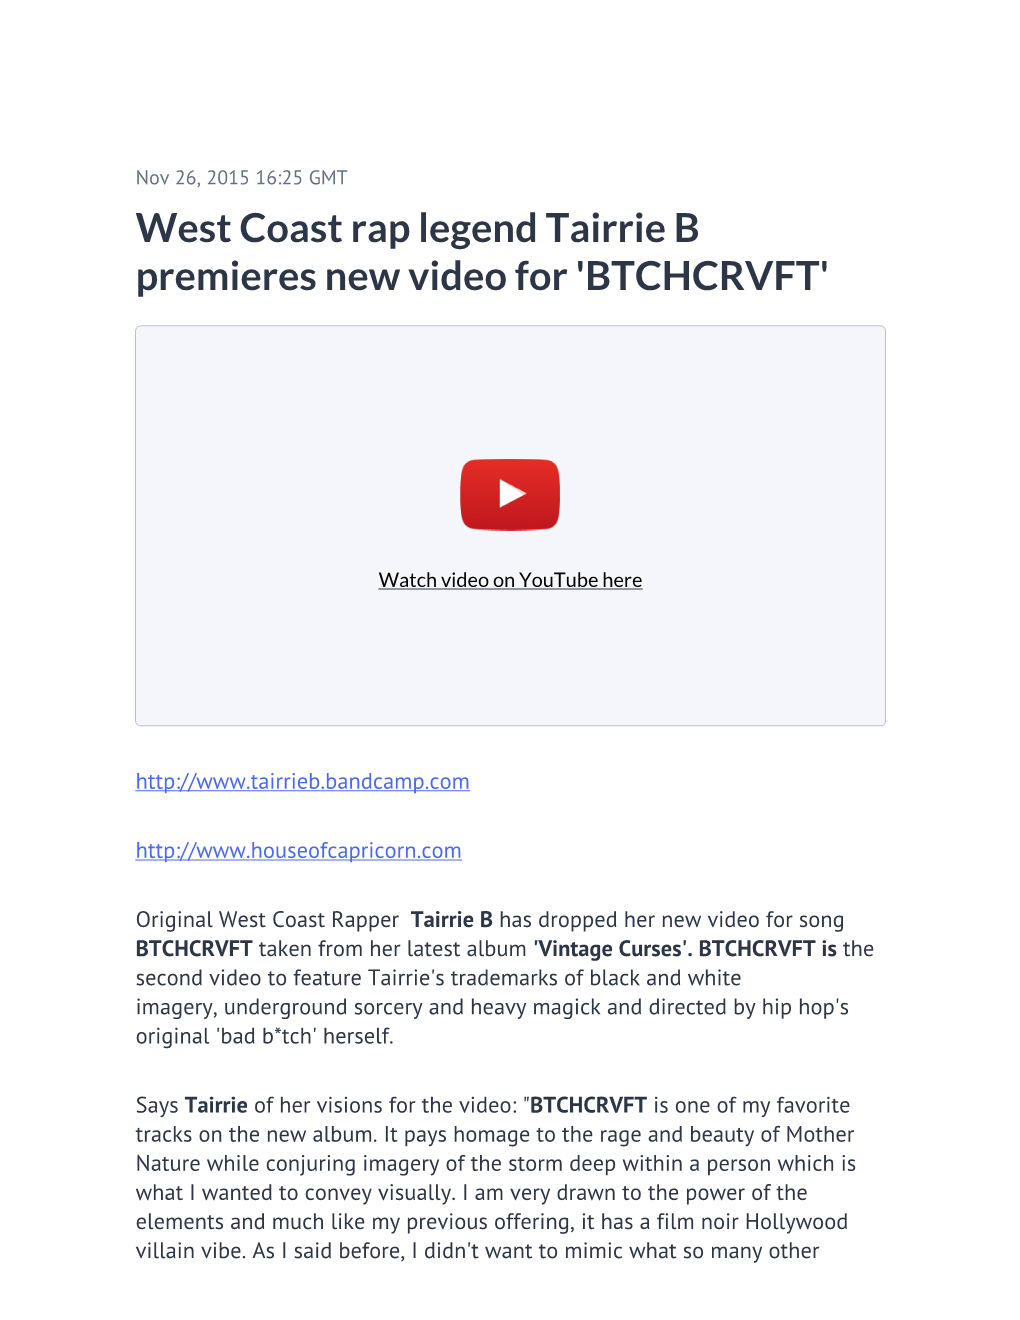 West Coast Rap Legend Tairrie B Premieres New Video for 'BTCHCRVFT'